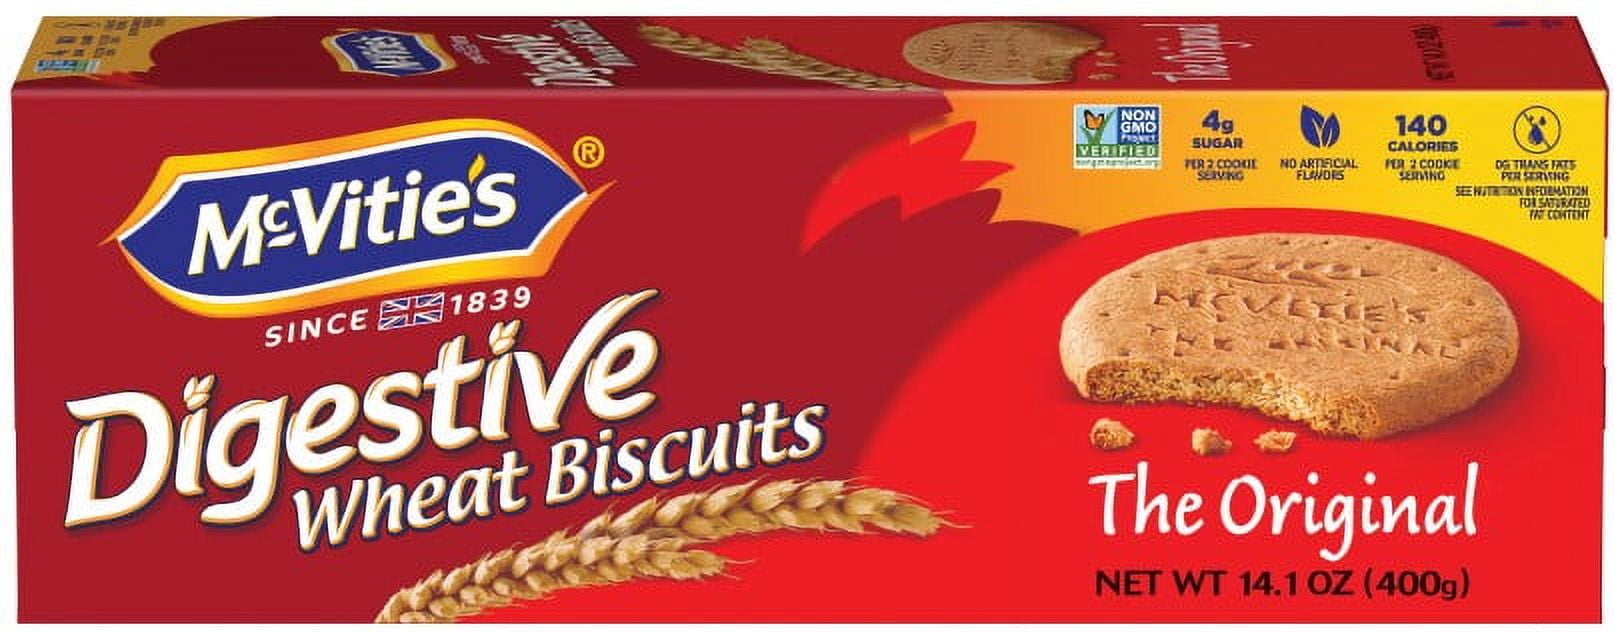 McVitie's Digestive Wheat Biscuits, The Original, 14.1 Oz